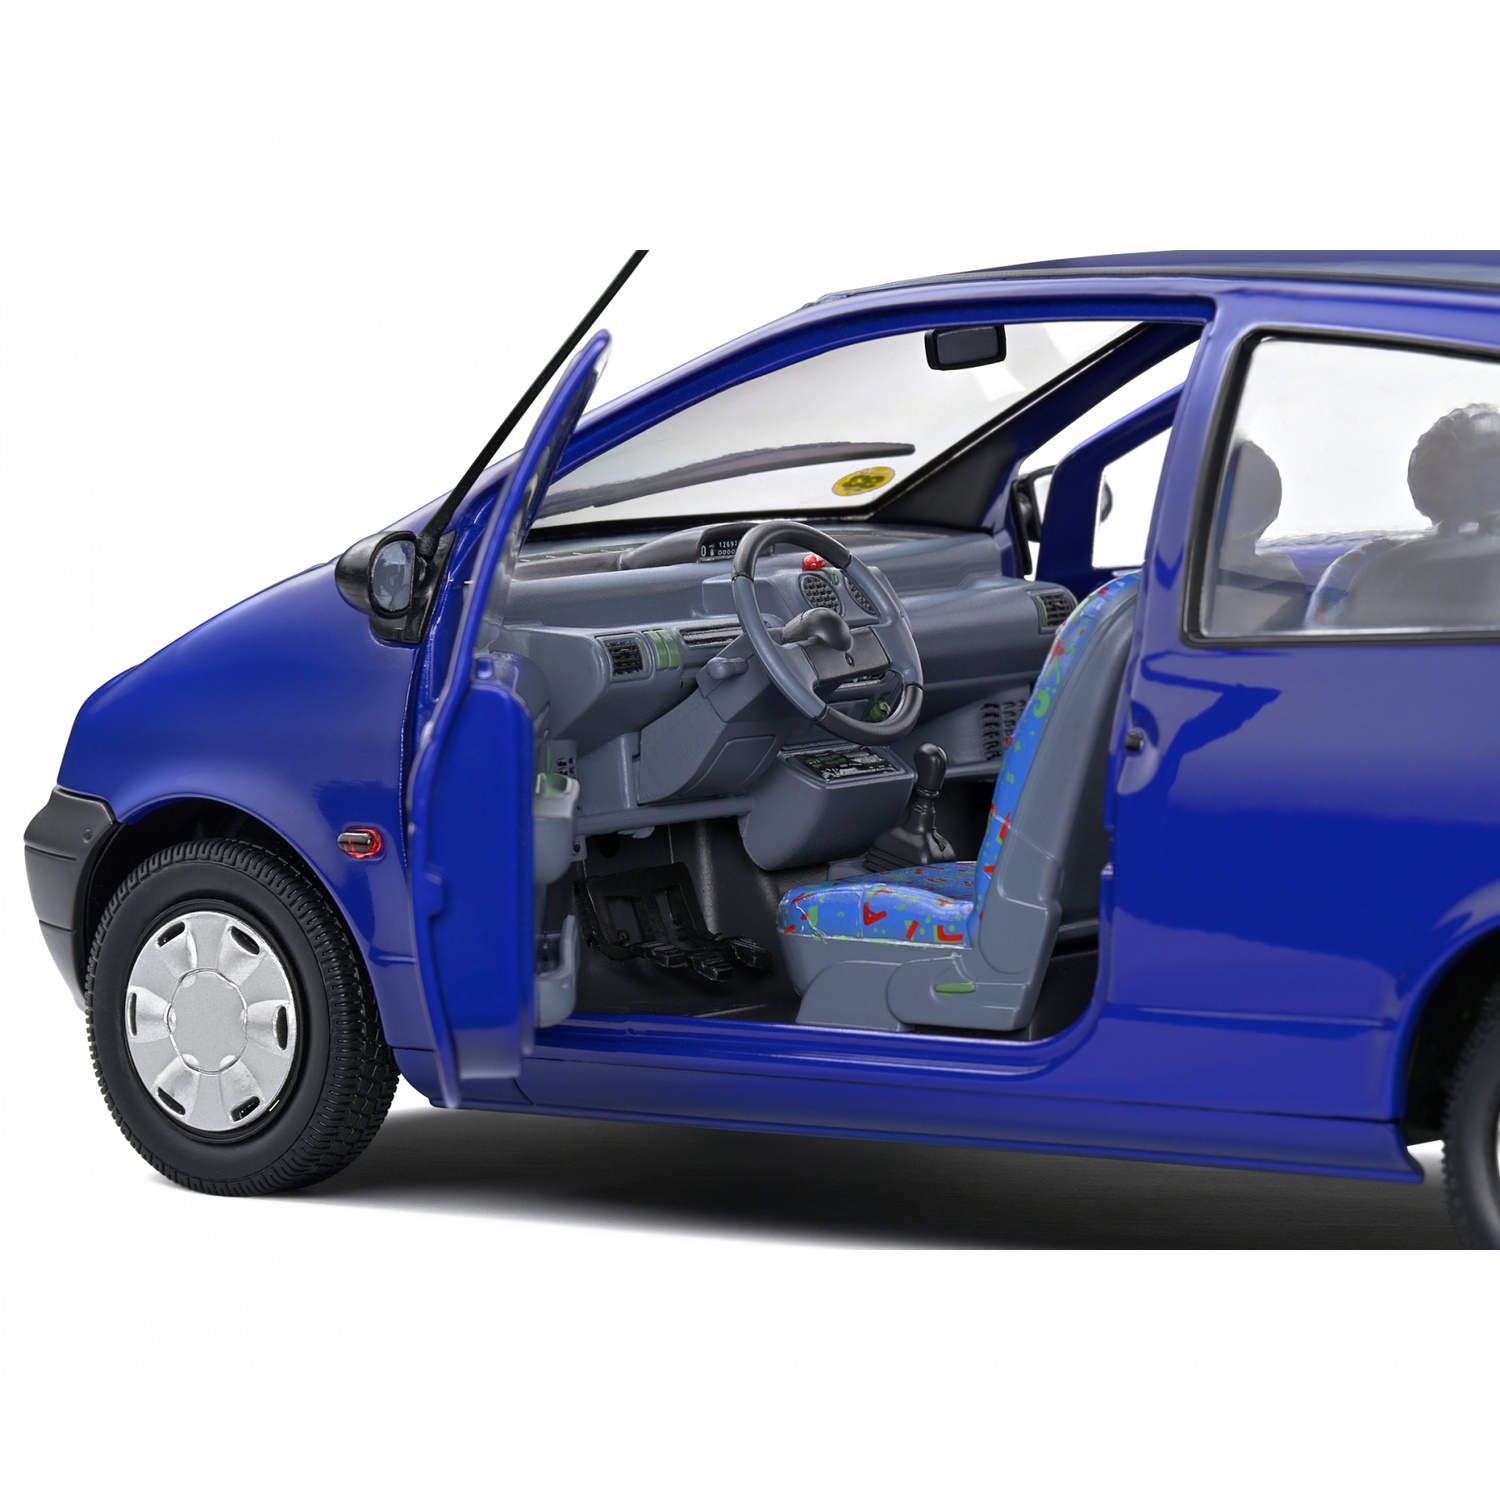 421182470 - Solido - Renault Twingo Mk I, blau